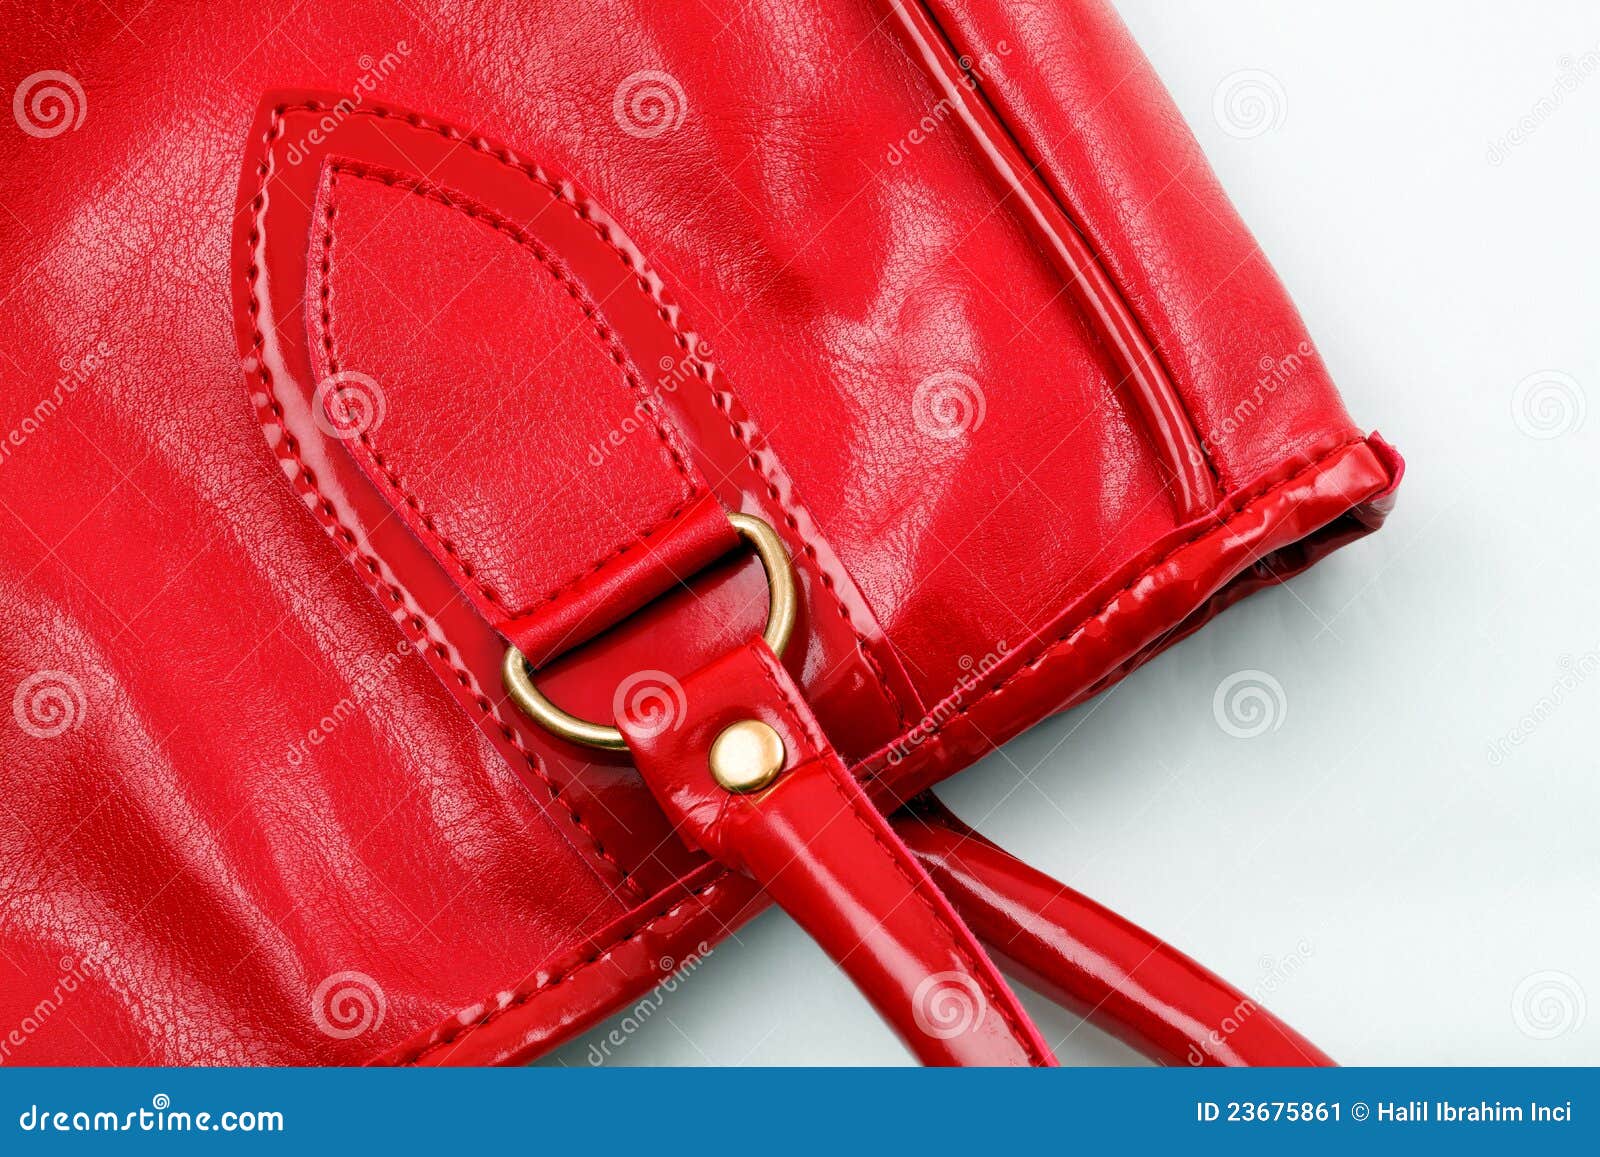 leather red handbag closer